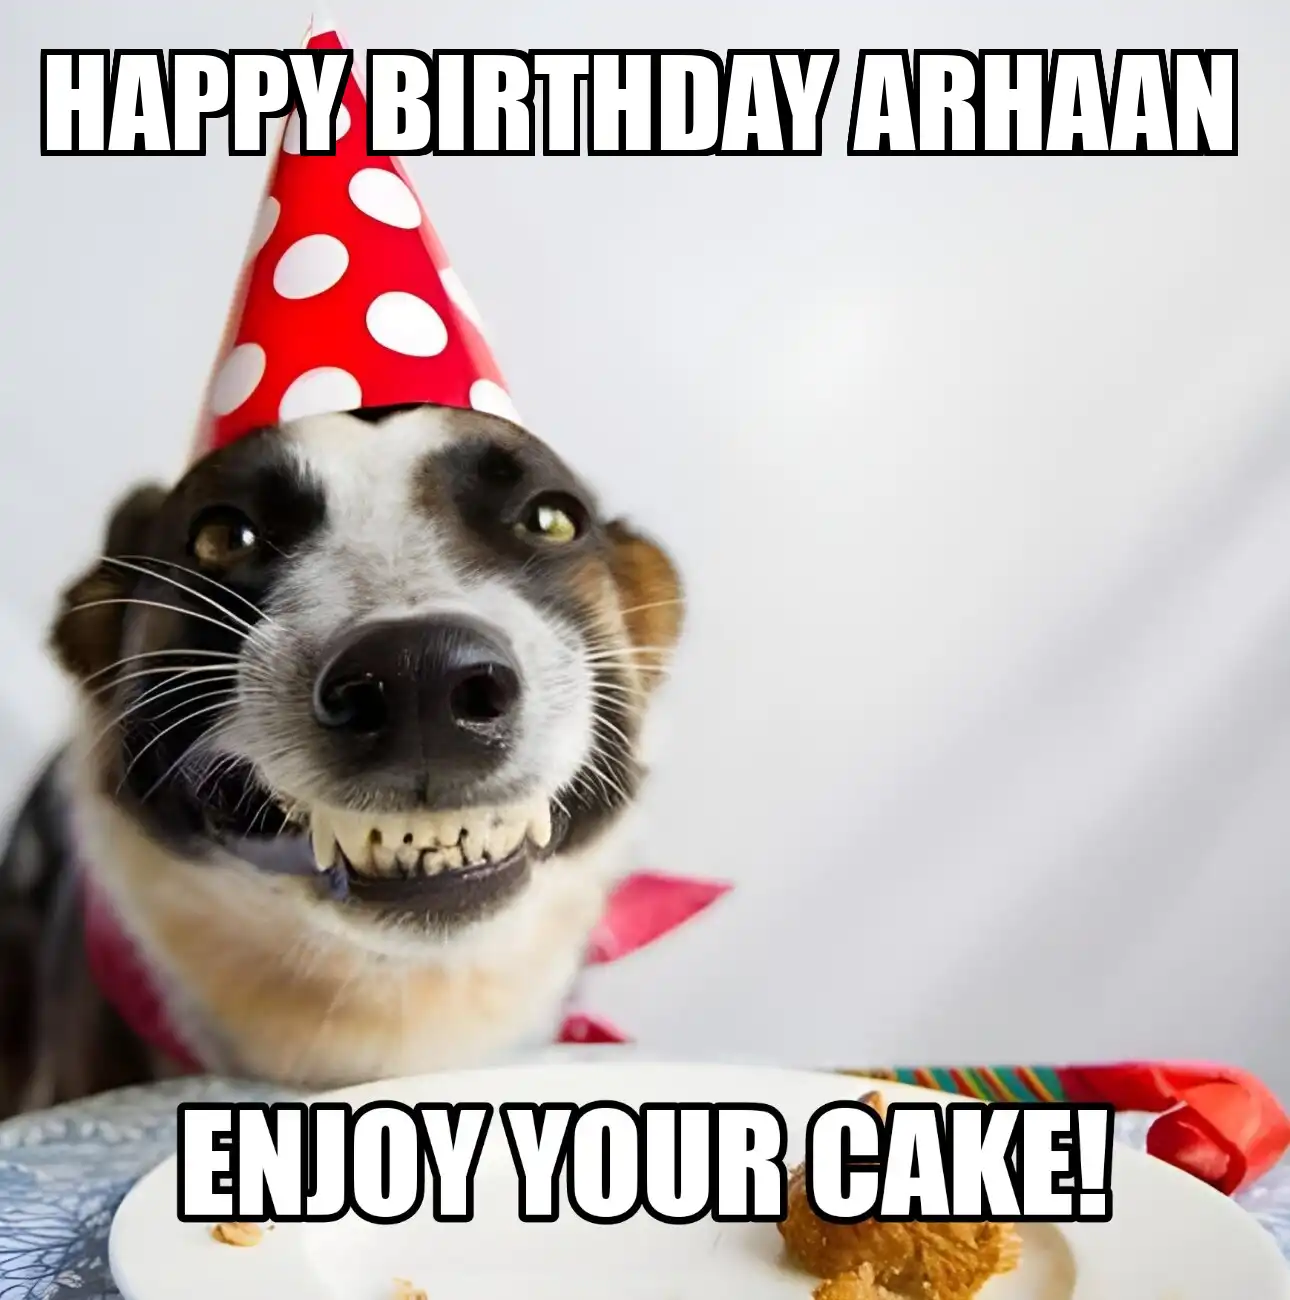 Happy Birthday Arhaan Enjoy Your Cake Dog Meme